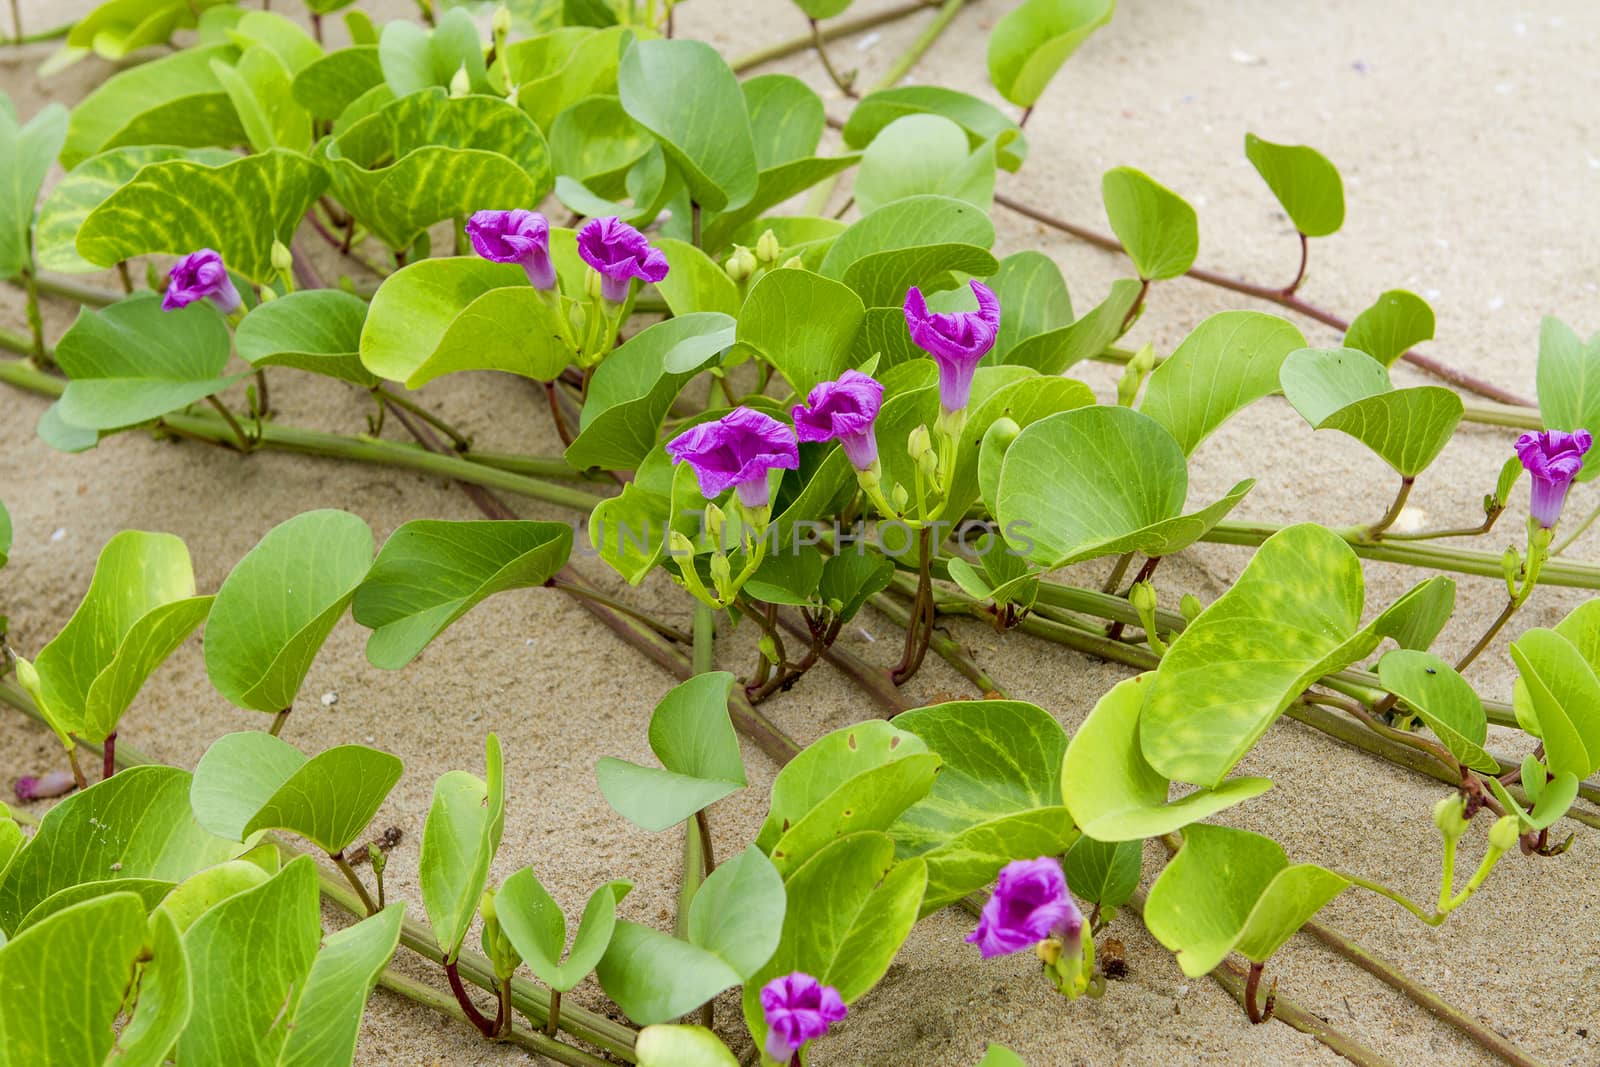 Beach Morning Glory has many purple flowers on the beach. by TakerWalker